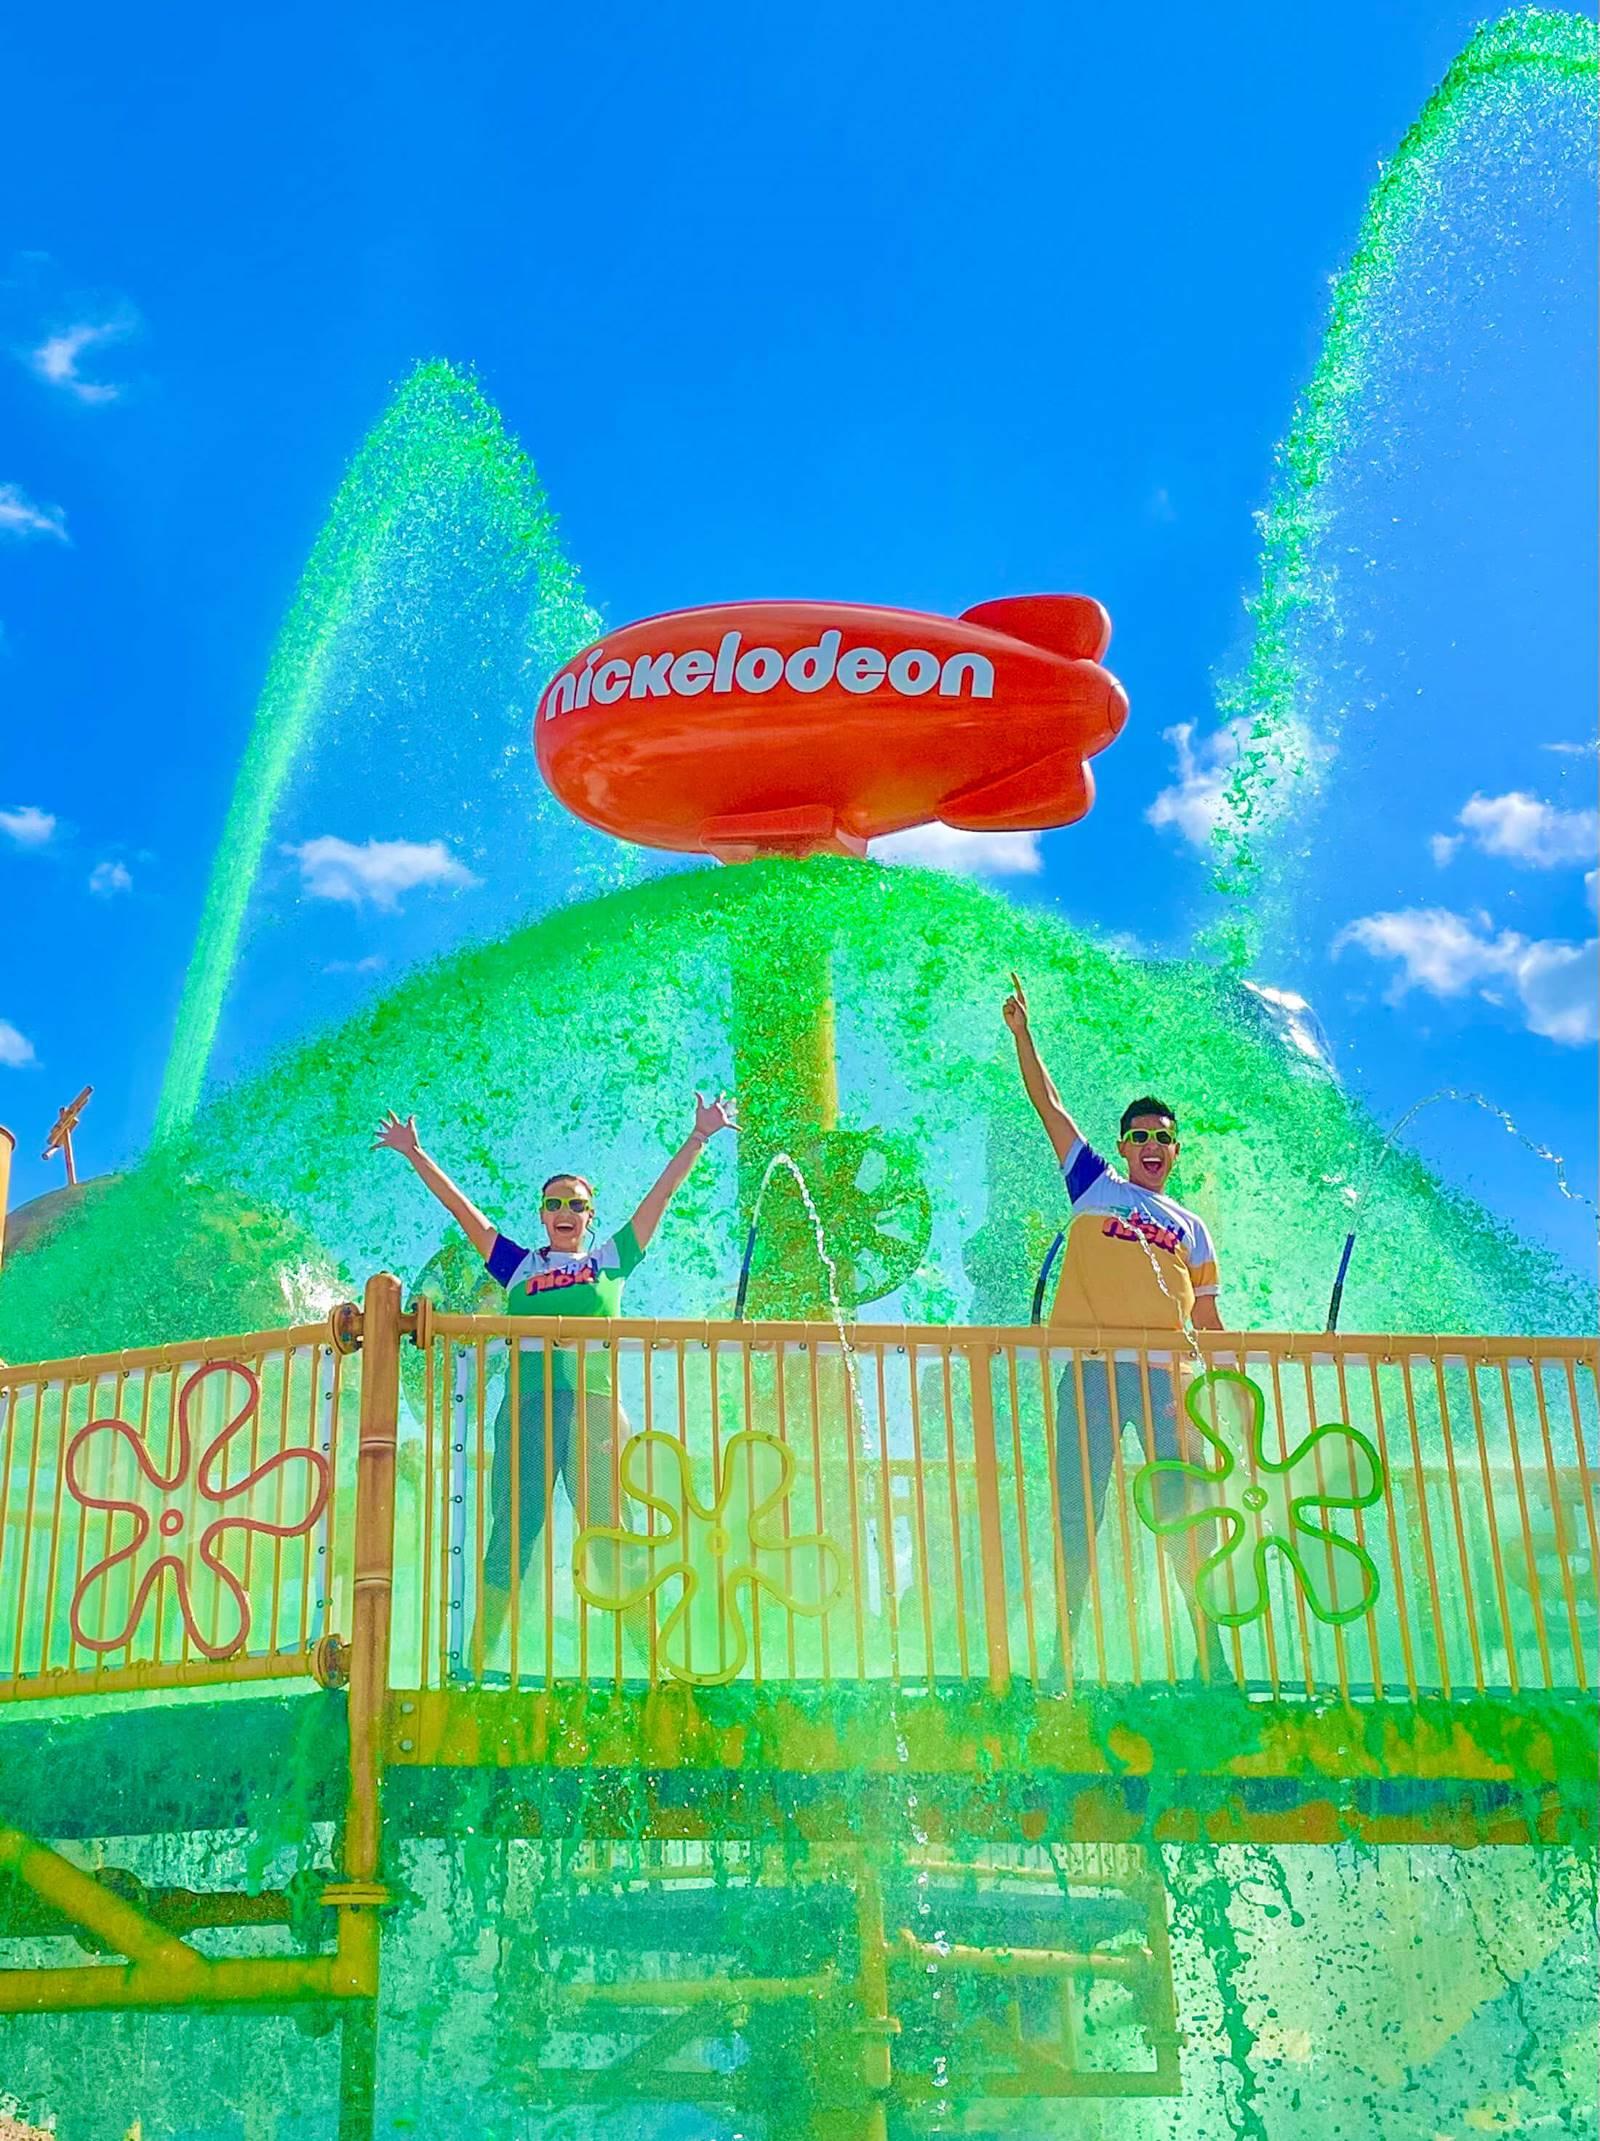 Nickelodeon staff standing in front of Nickelodeon Blimp statue